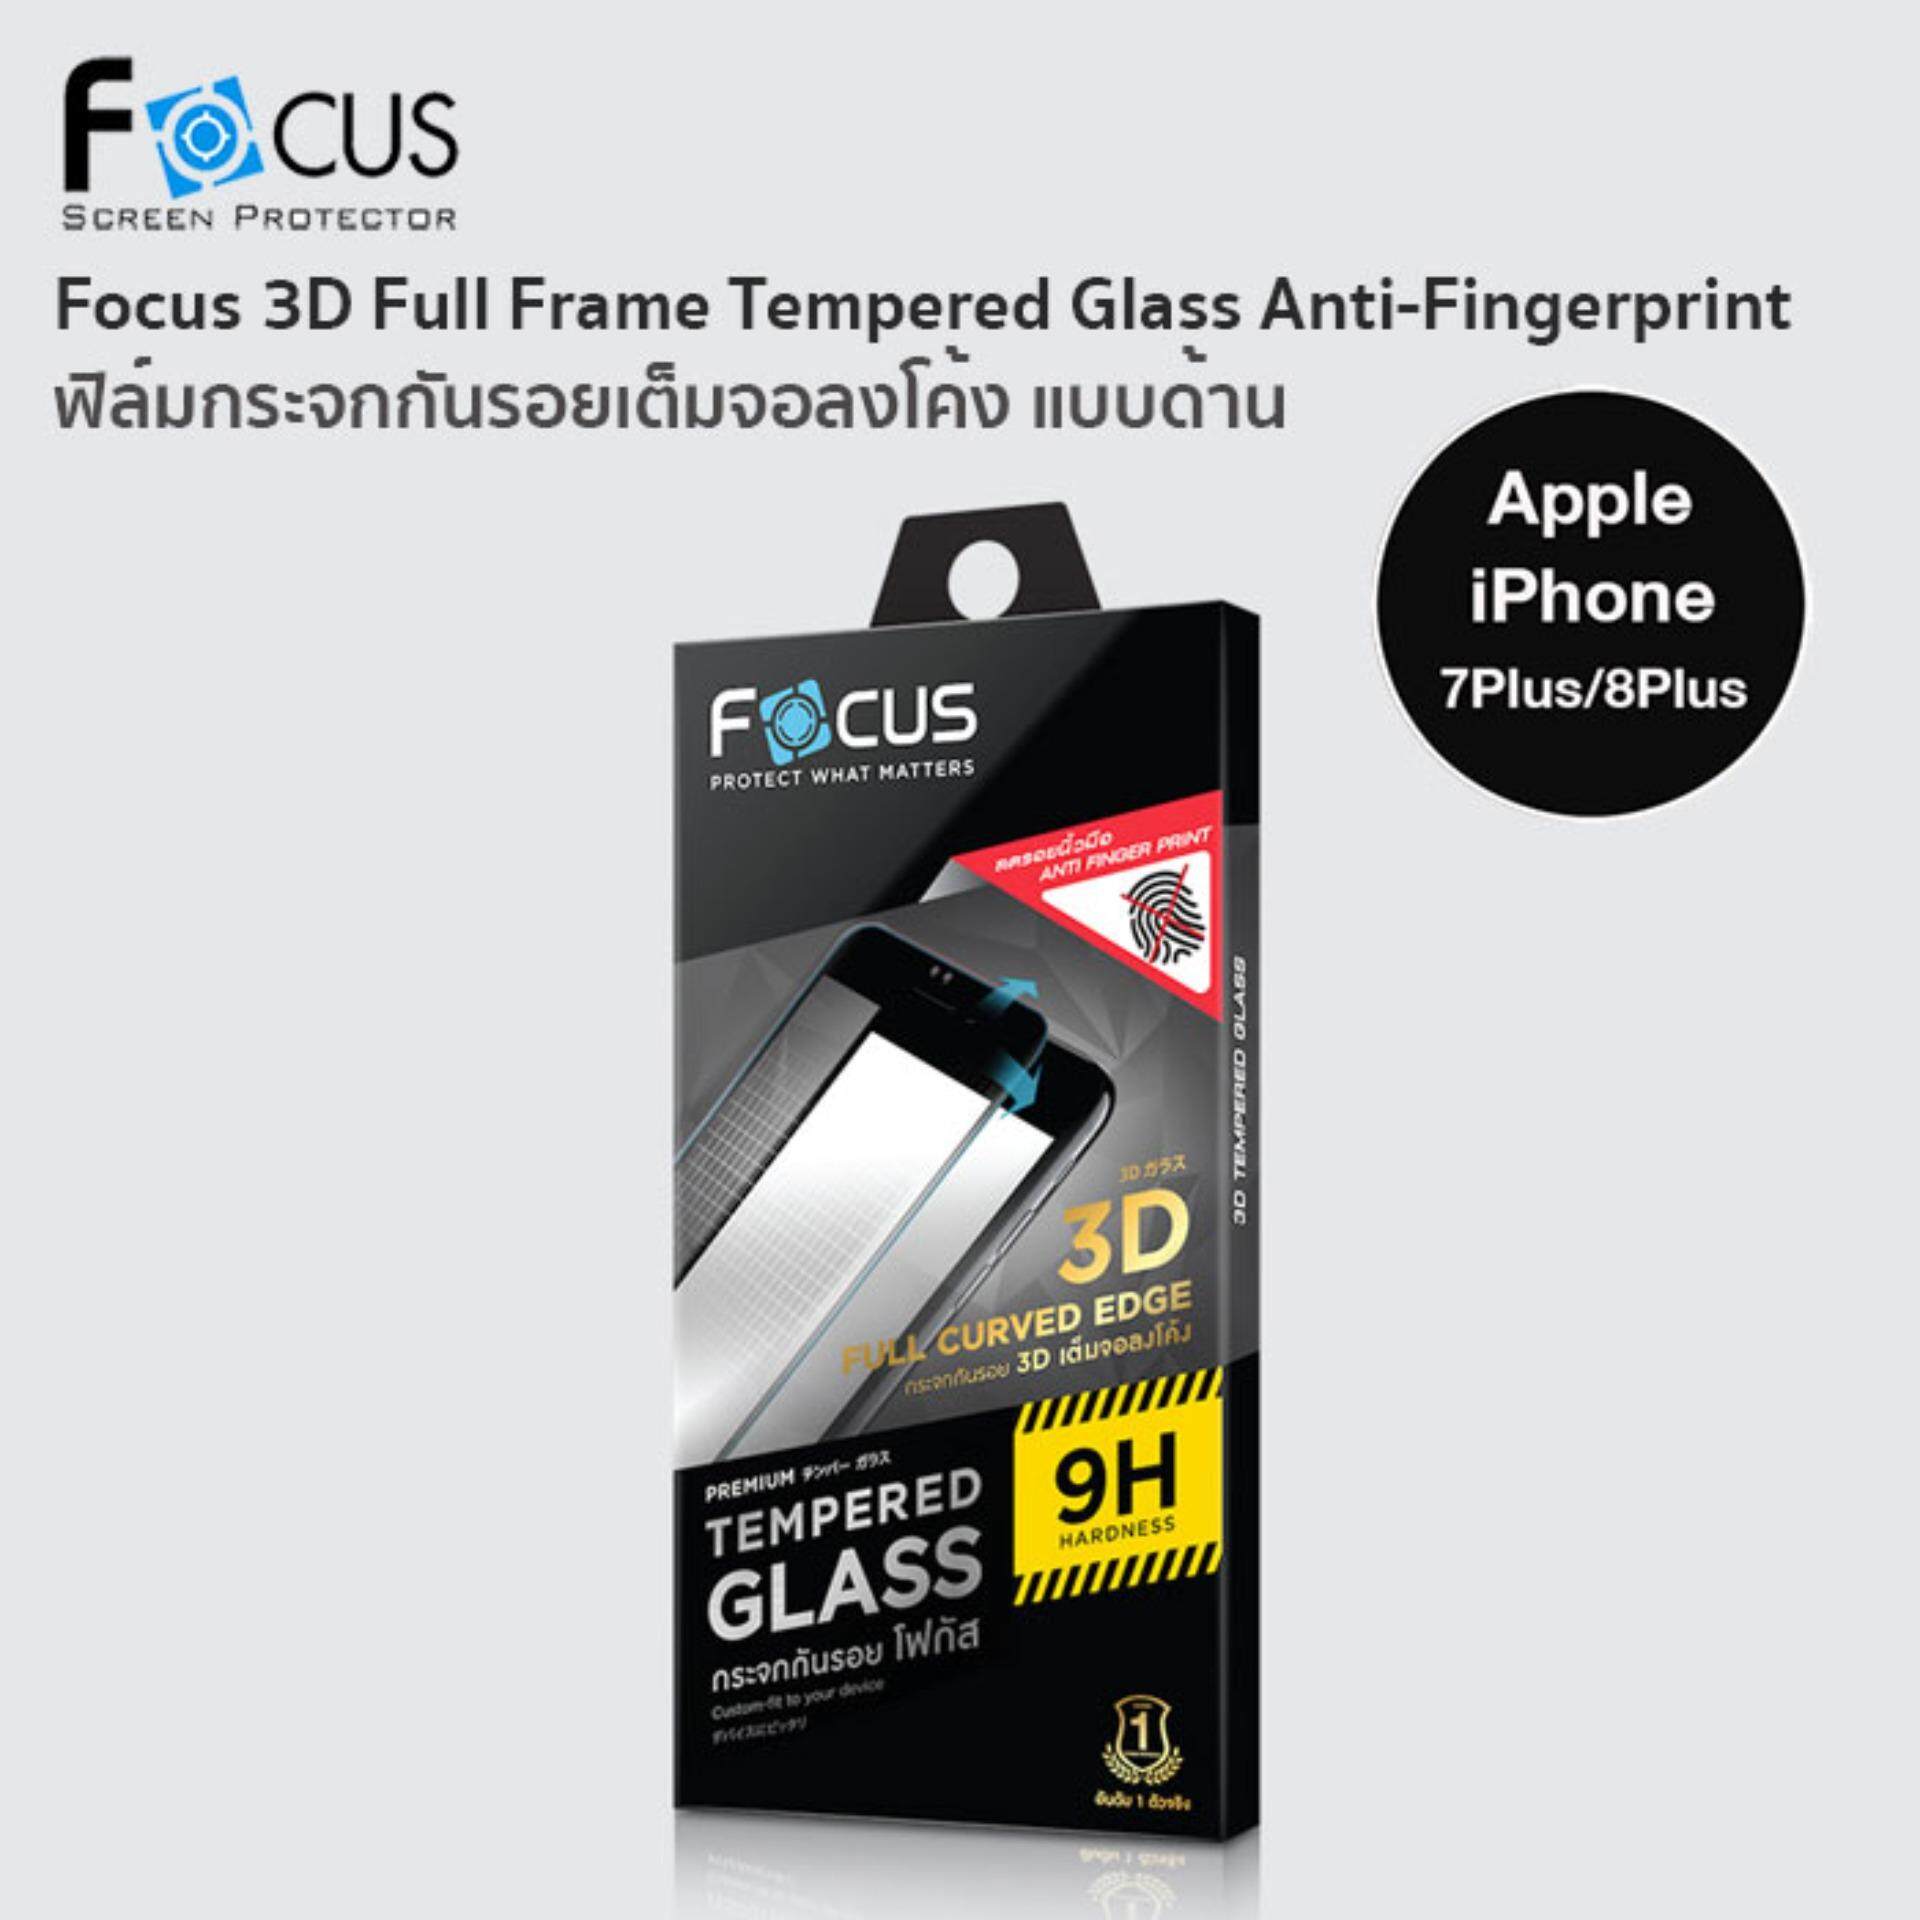 Focus 3D Full Frame Tempered Glass Anti-Fingerprint ฟิล์มกระจกกันรอยเต็มจอลงโค้ง แบบด้าน ของแท้ สำหรับ Apple iPhone 7Plus/8Plus  Black(ขอบดำ)